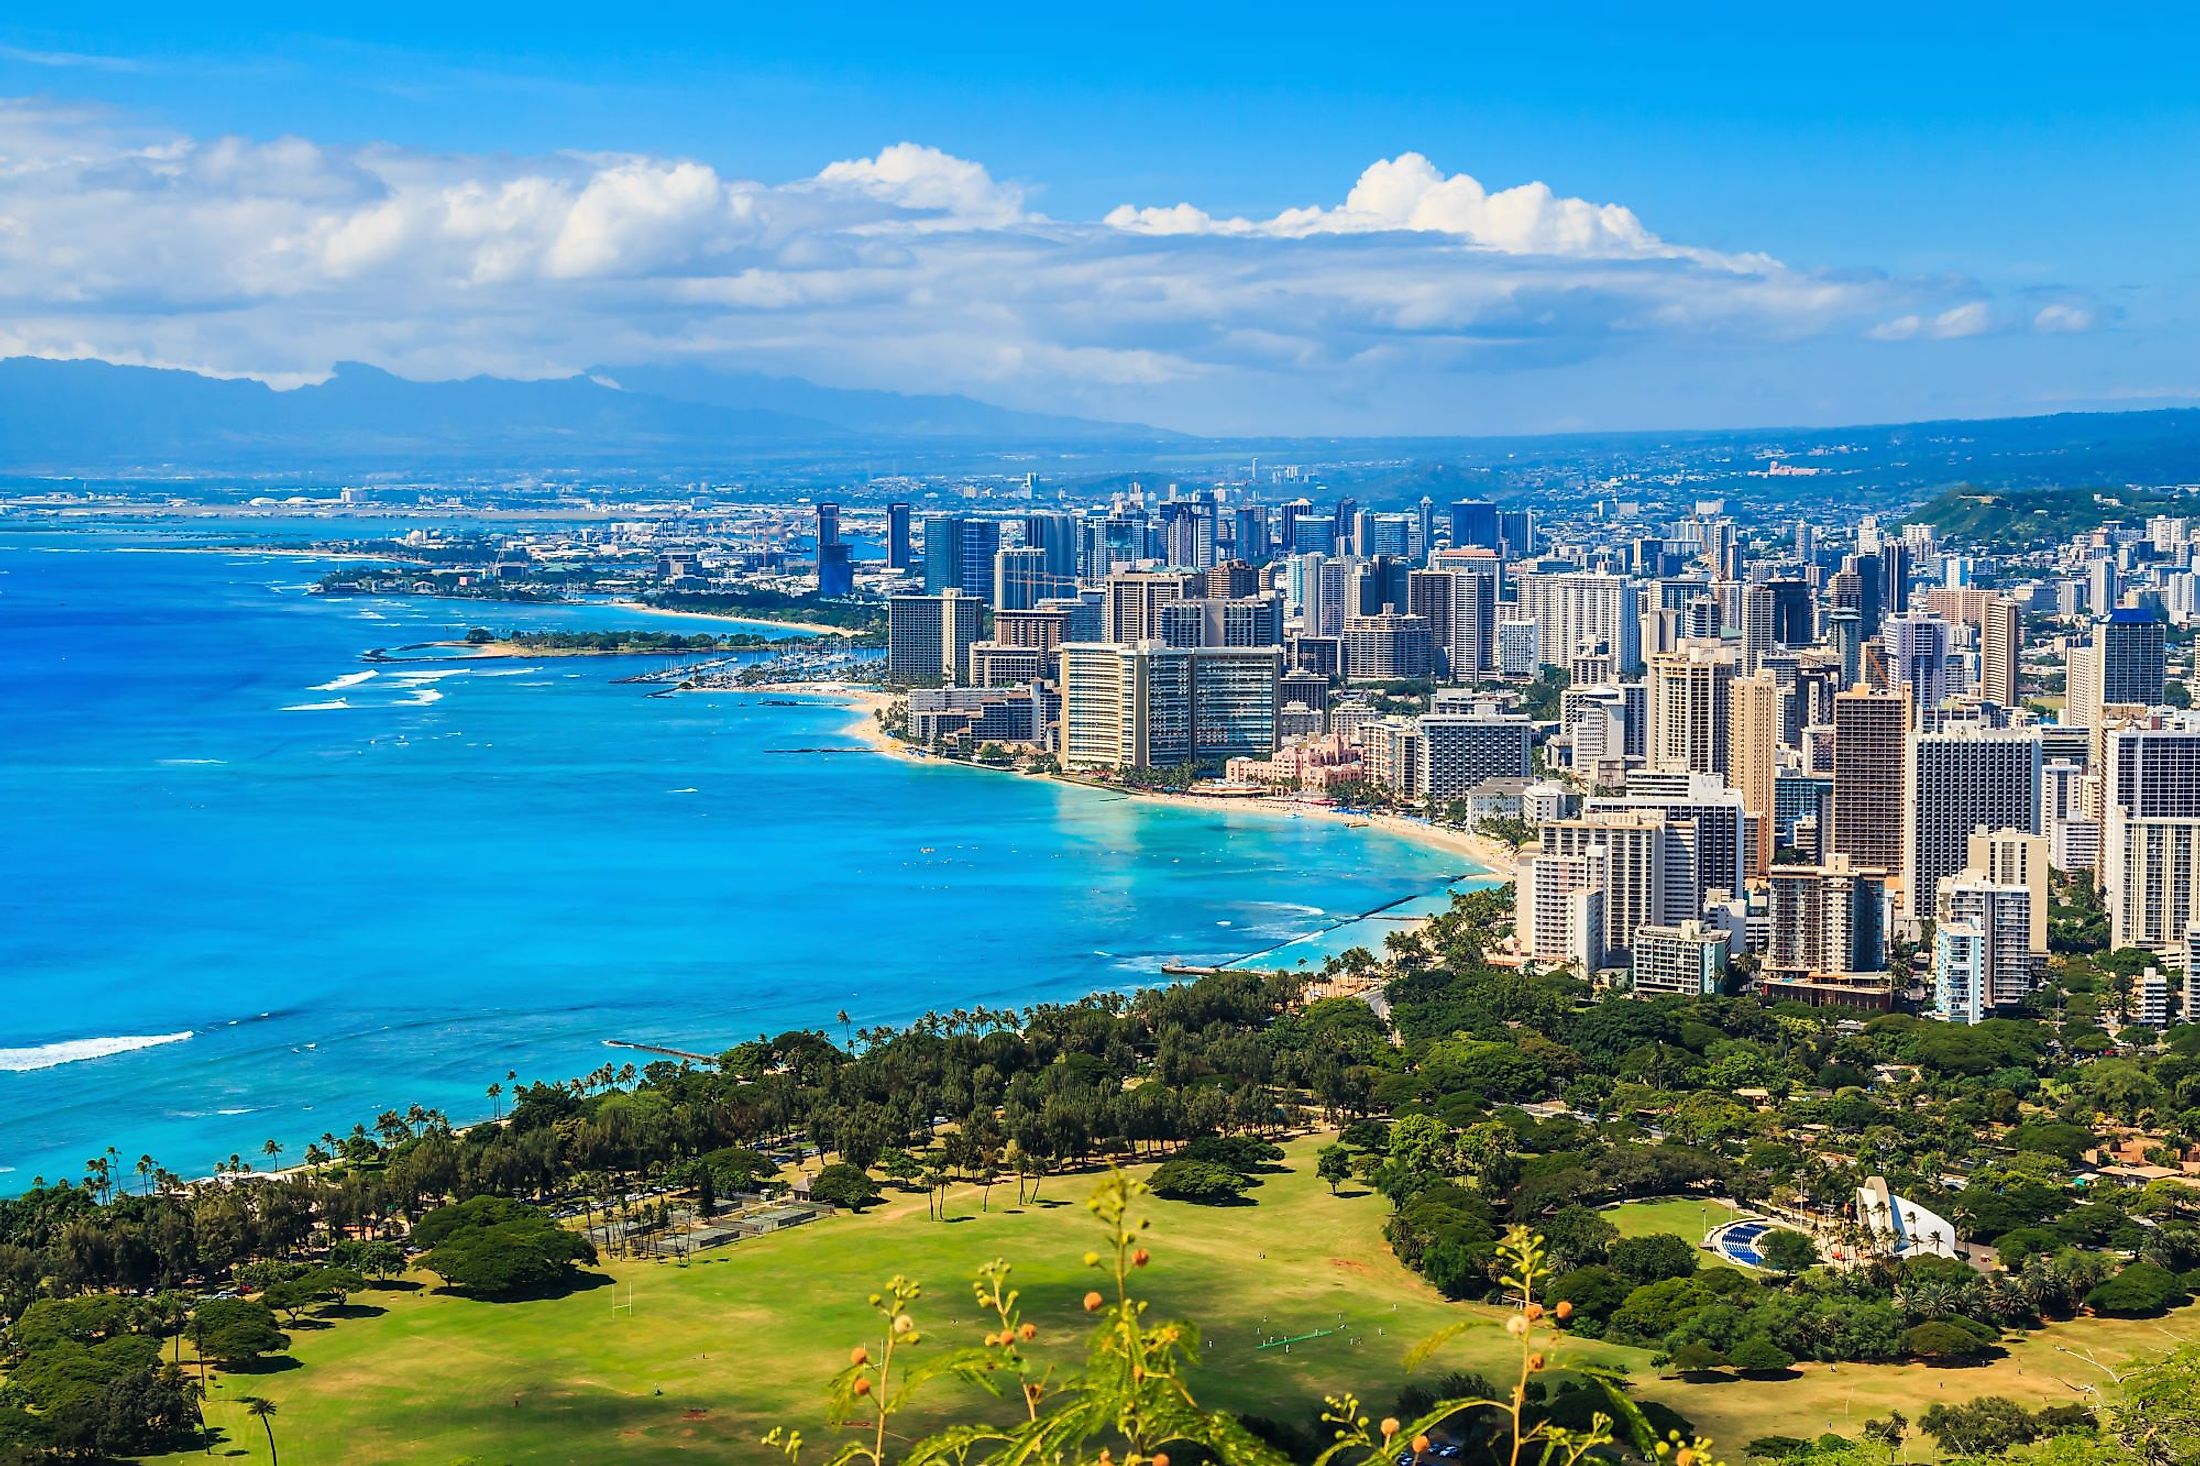 Skyline of Honolulu, Hawaii and the surrounding area including the hotels and buildings on Waikiki Beach. 